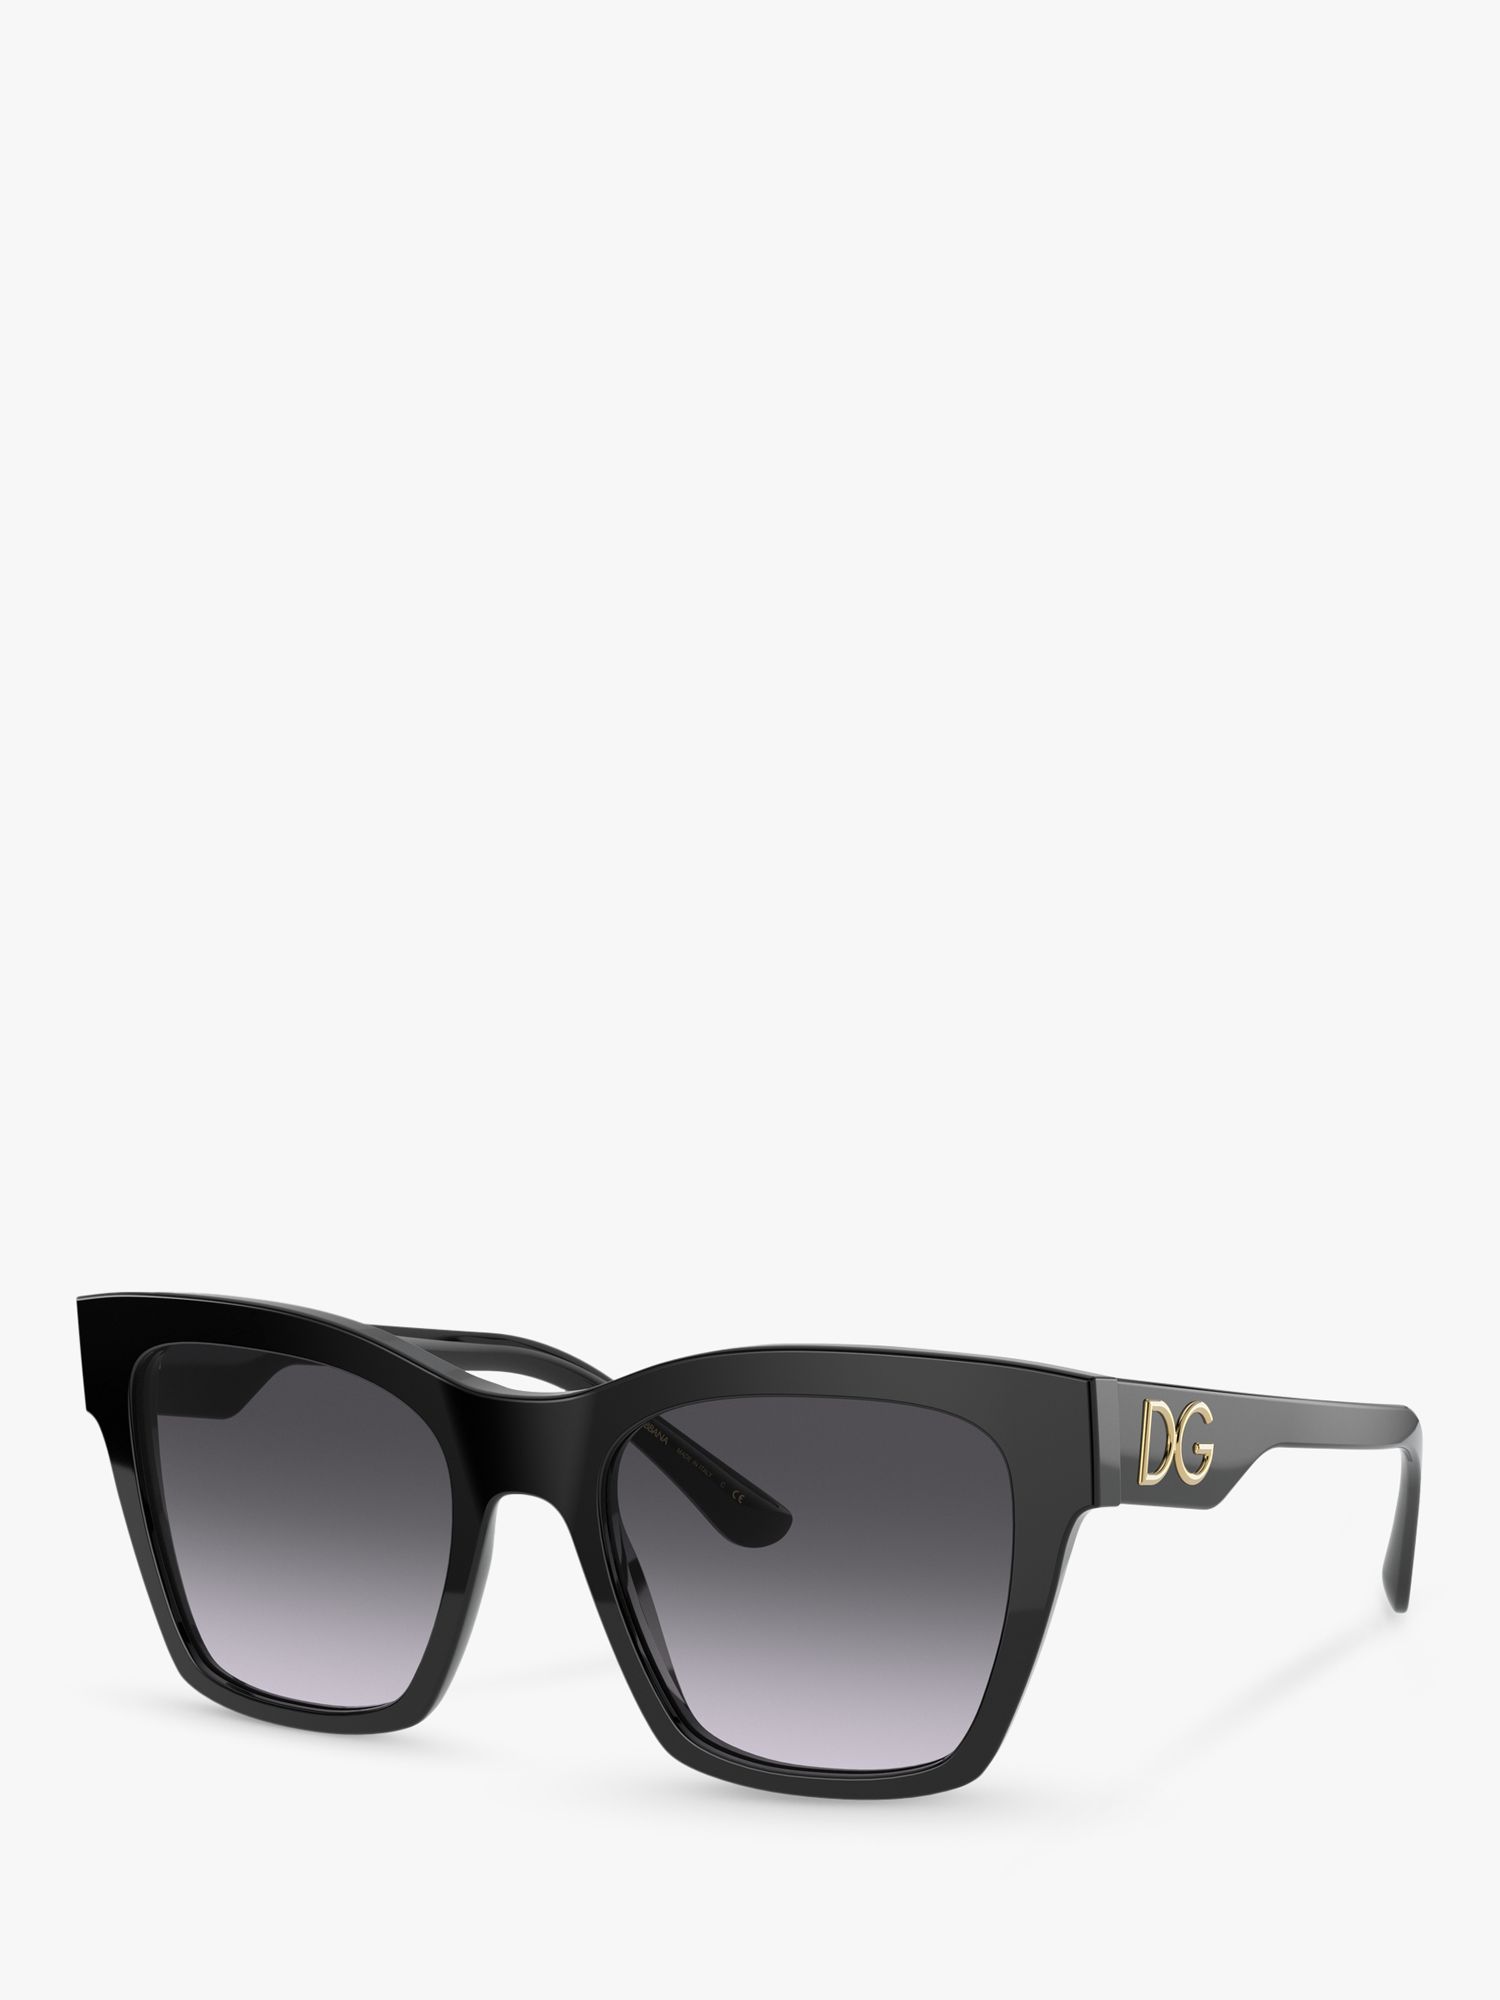 Dolce & Gabbana DG4384 Women's Square Sunglasses, Black/Grey Gradient at  John Lewis & Partners